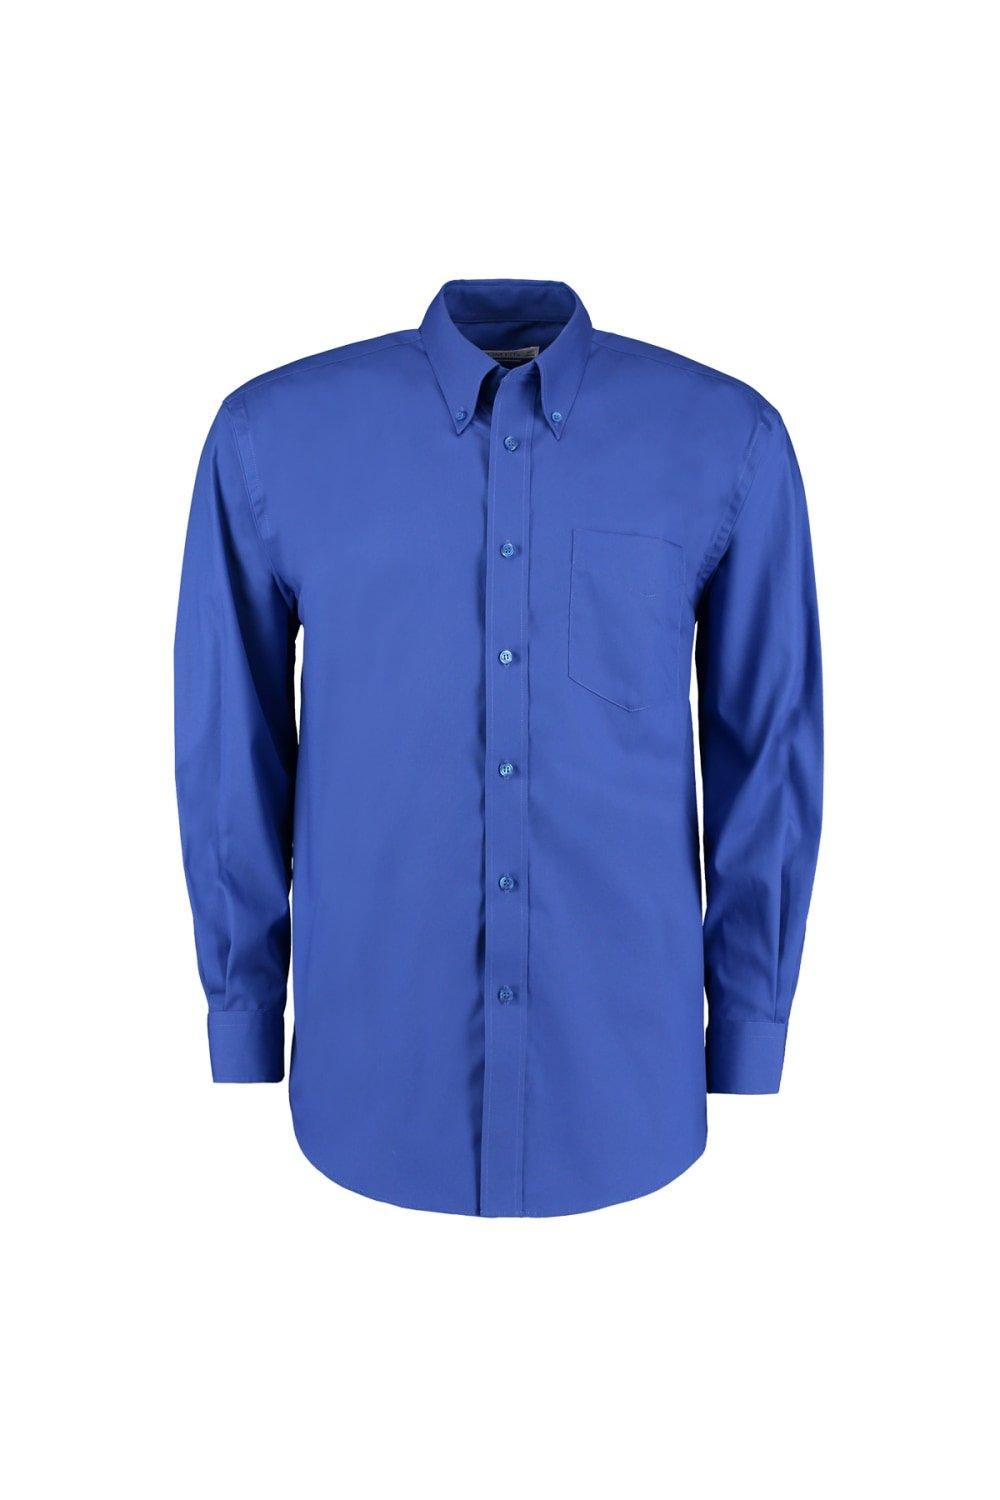 Корпоративная оксфордская рубашка с длинным рукавом Kustom Kit, синий